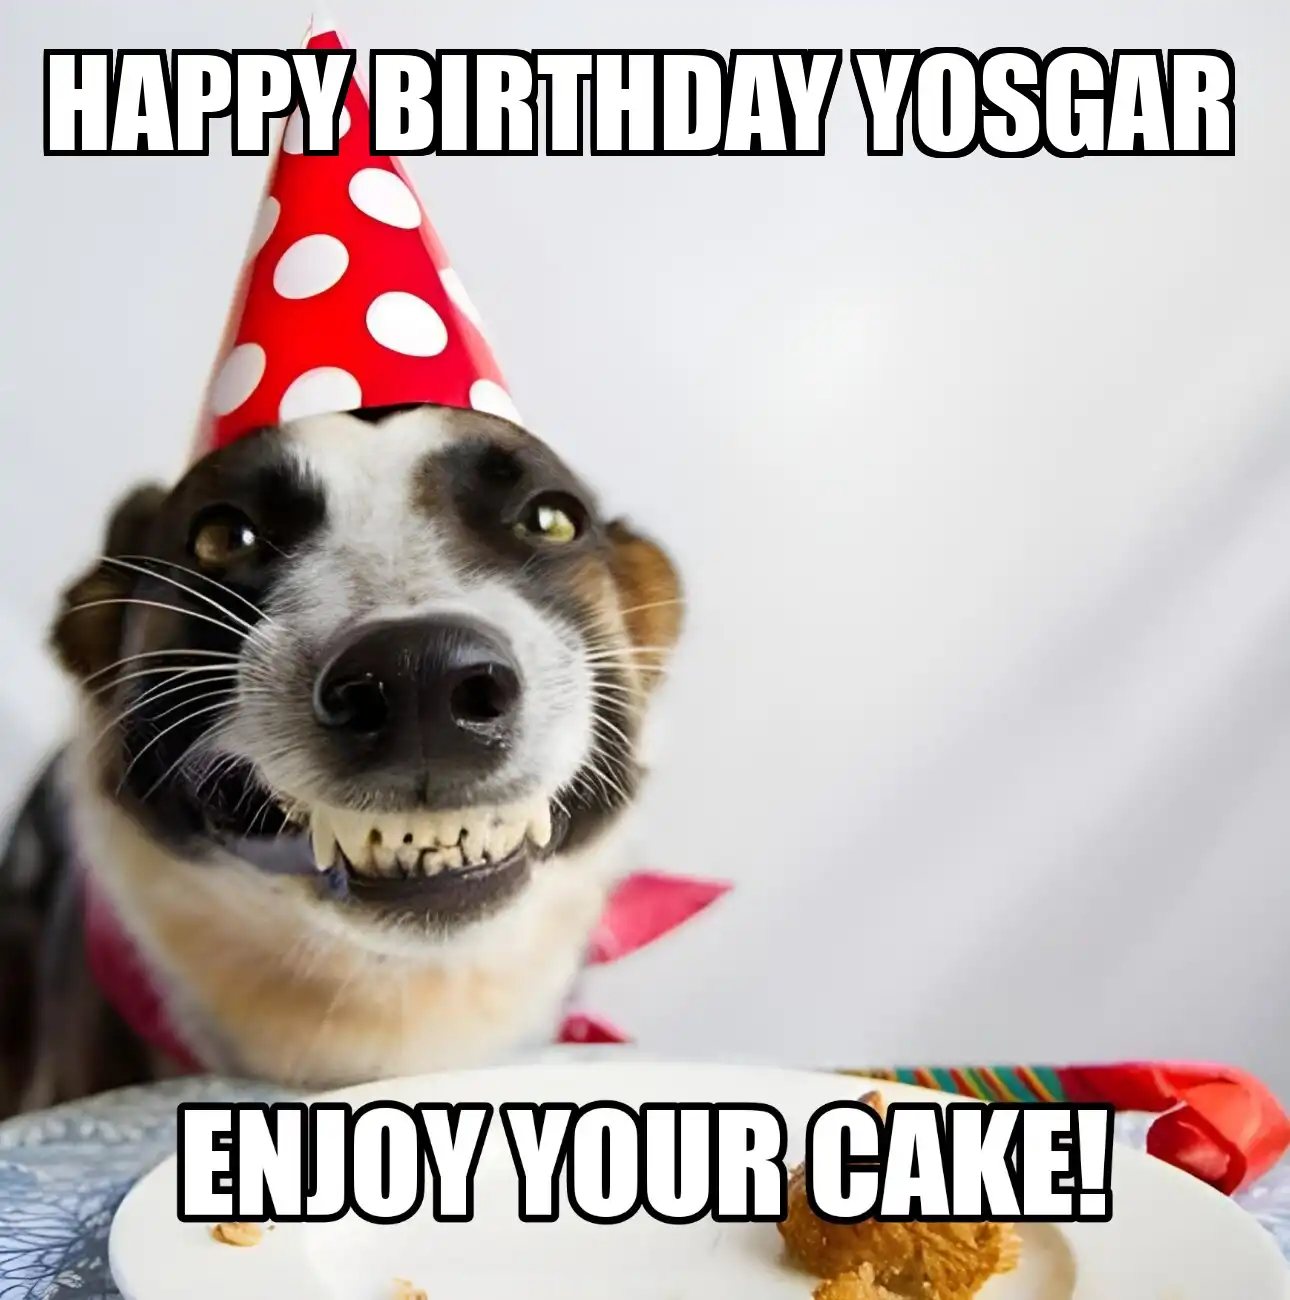 Happy Birthday Yosgar Enjoy Your Cake Dog Meme